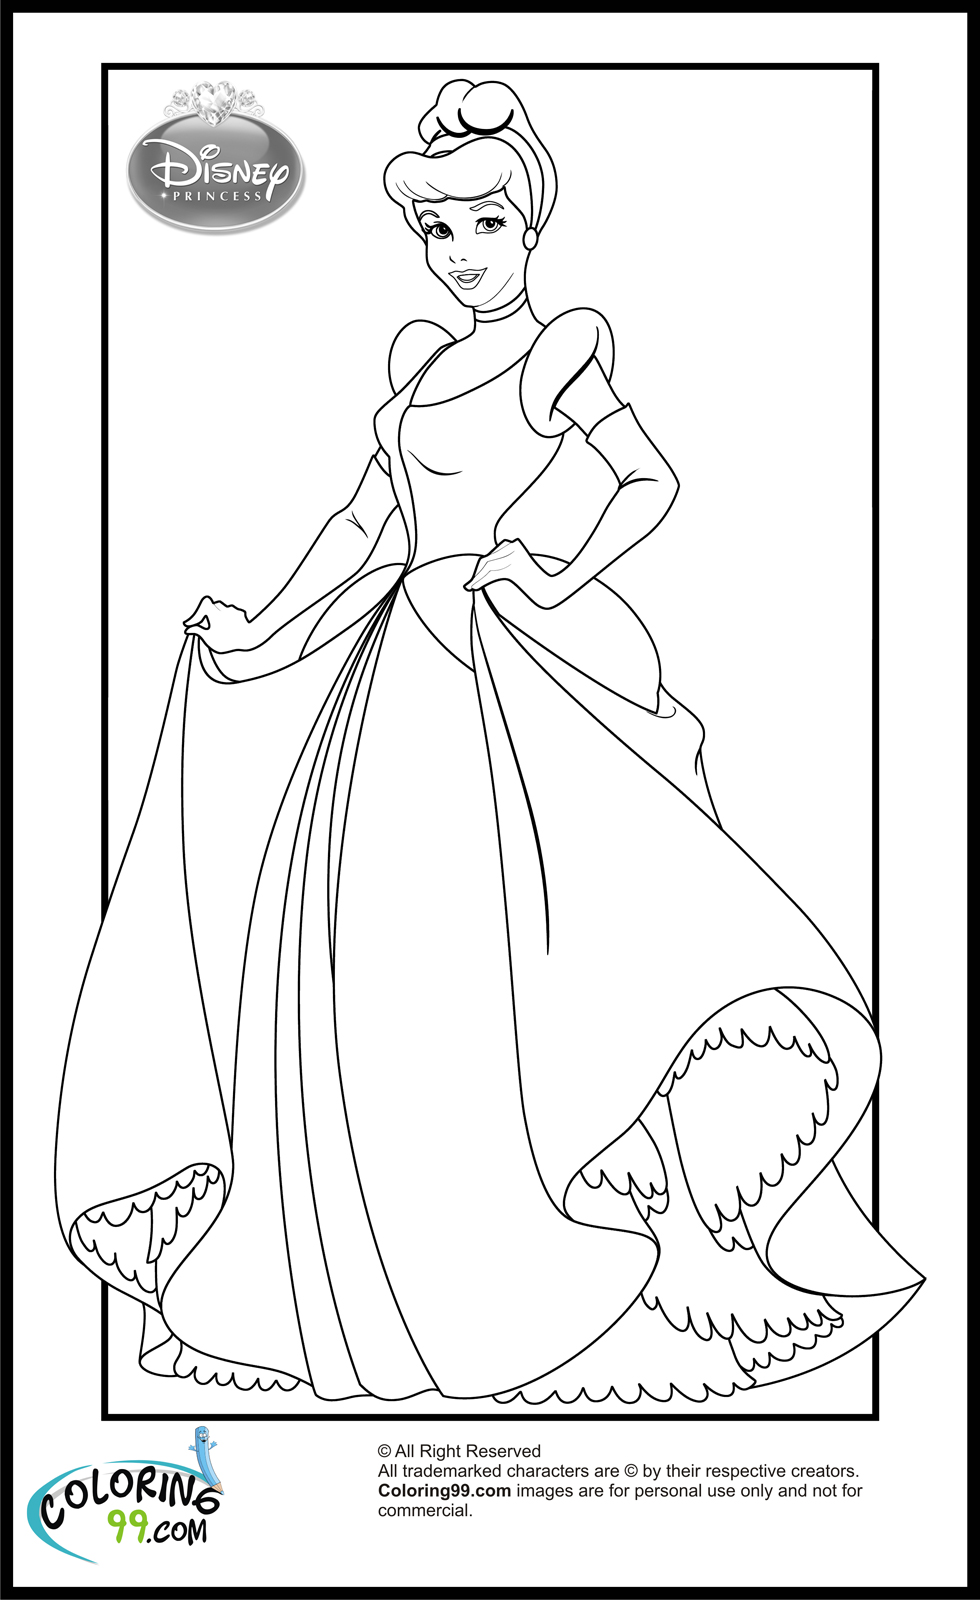 Download Disney Princess Cinderella Coloring Pages | Minister Coloring